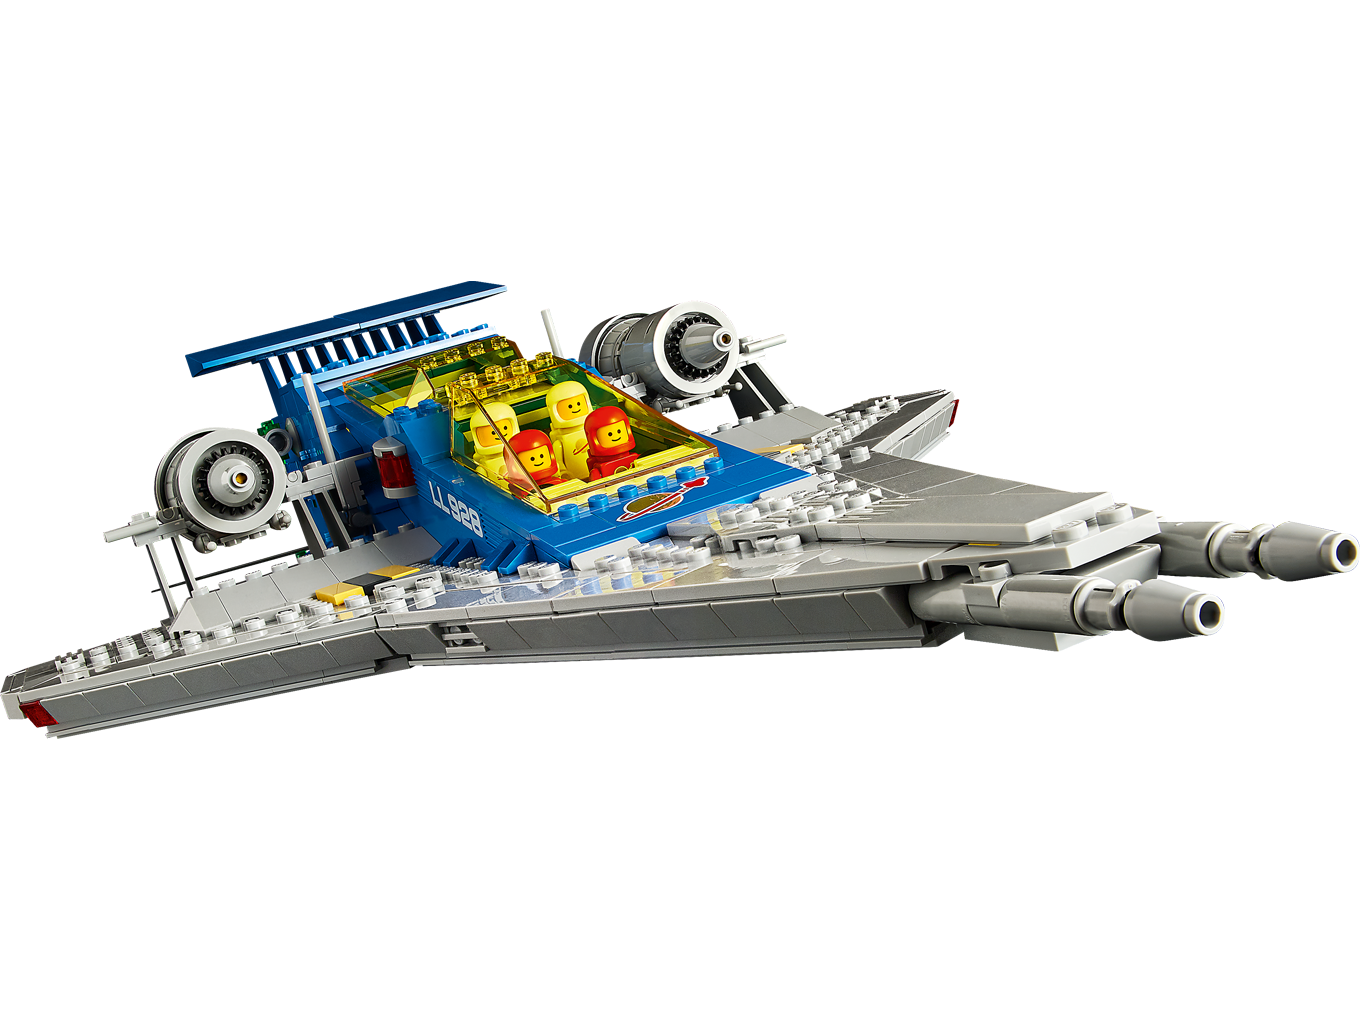 LEGO Icons 10497 - Galaxy Explorer